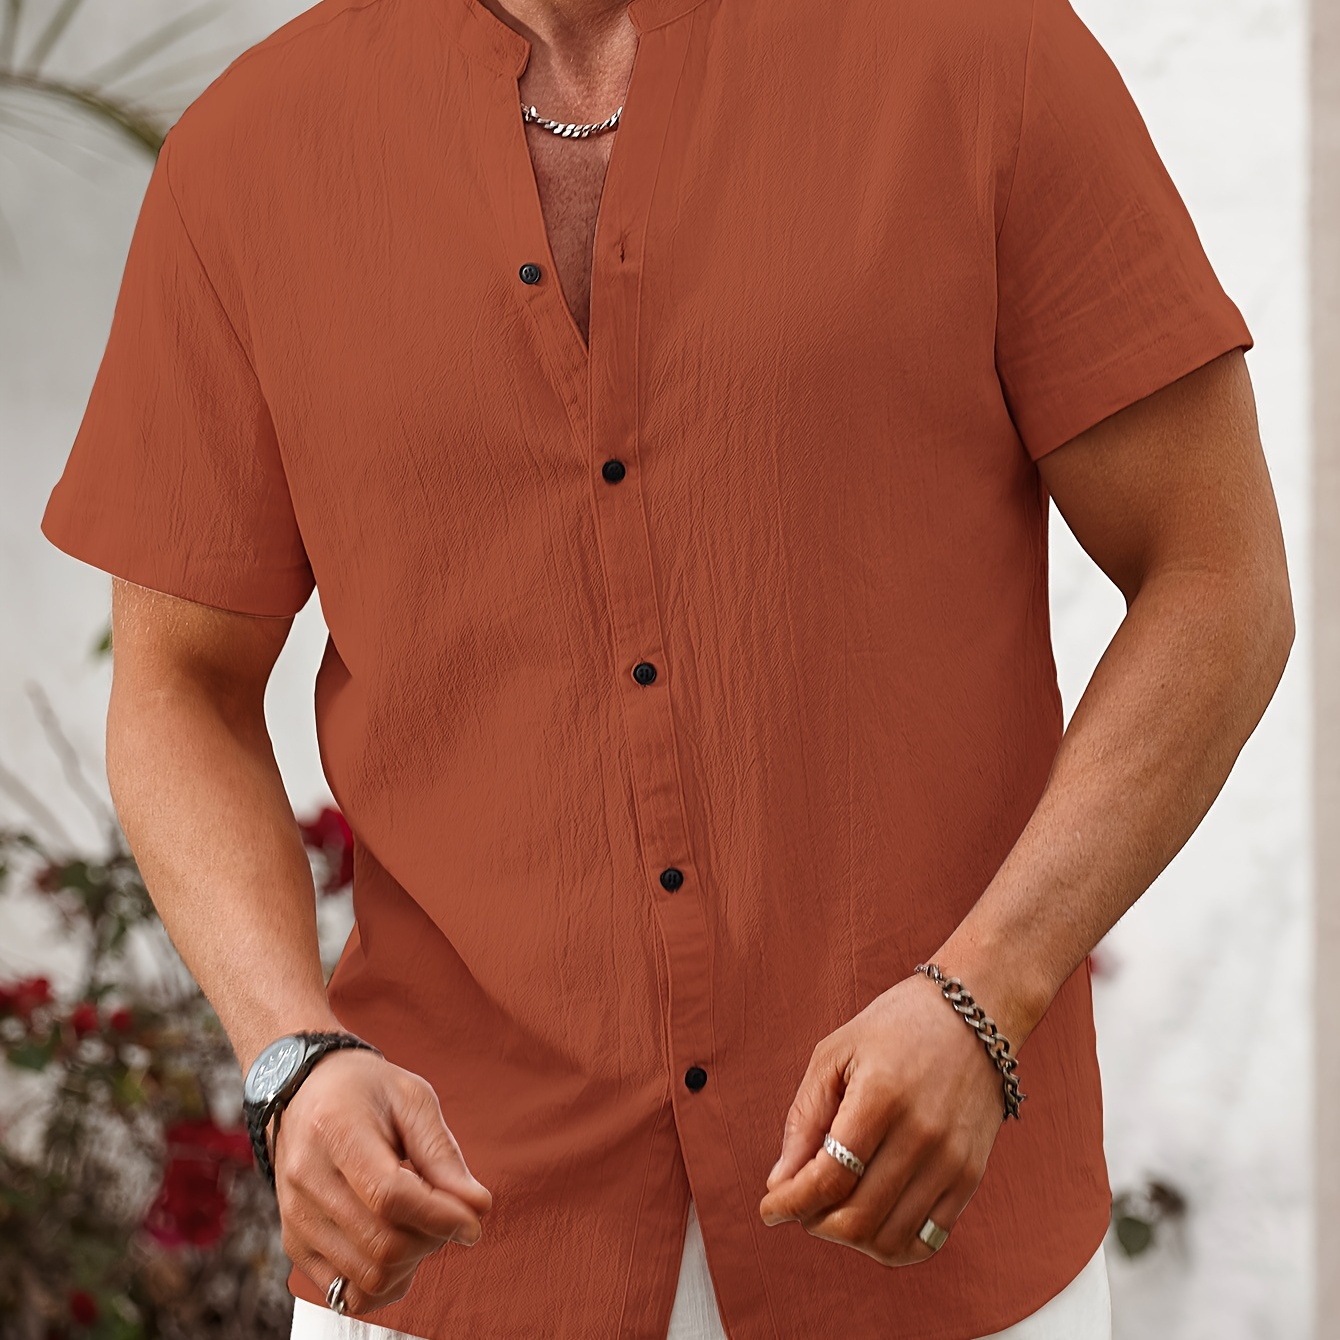 

Men's 100% Cotton Solid Shirt, Casual Stand Collar Button Up Short Sleeve Shirt For Summer Outdoor Activities